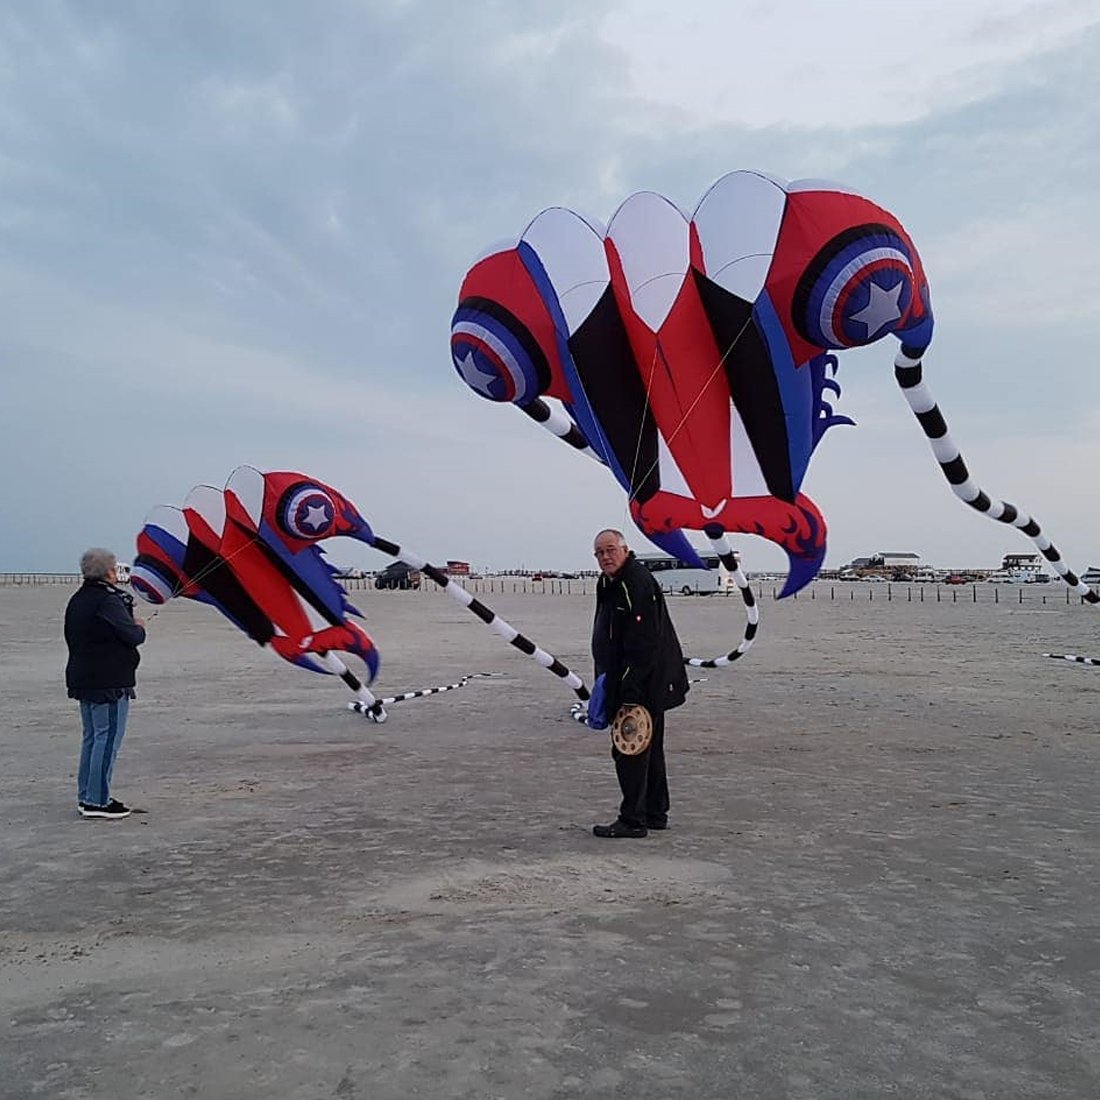 7㎡~16㎡ Trilobite Kite Large Single Line Parafoil Kite Line Laundry Soft Inflatable Kite 30D Ripstop Nylon with Bag